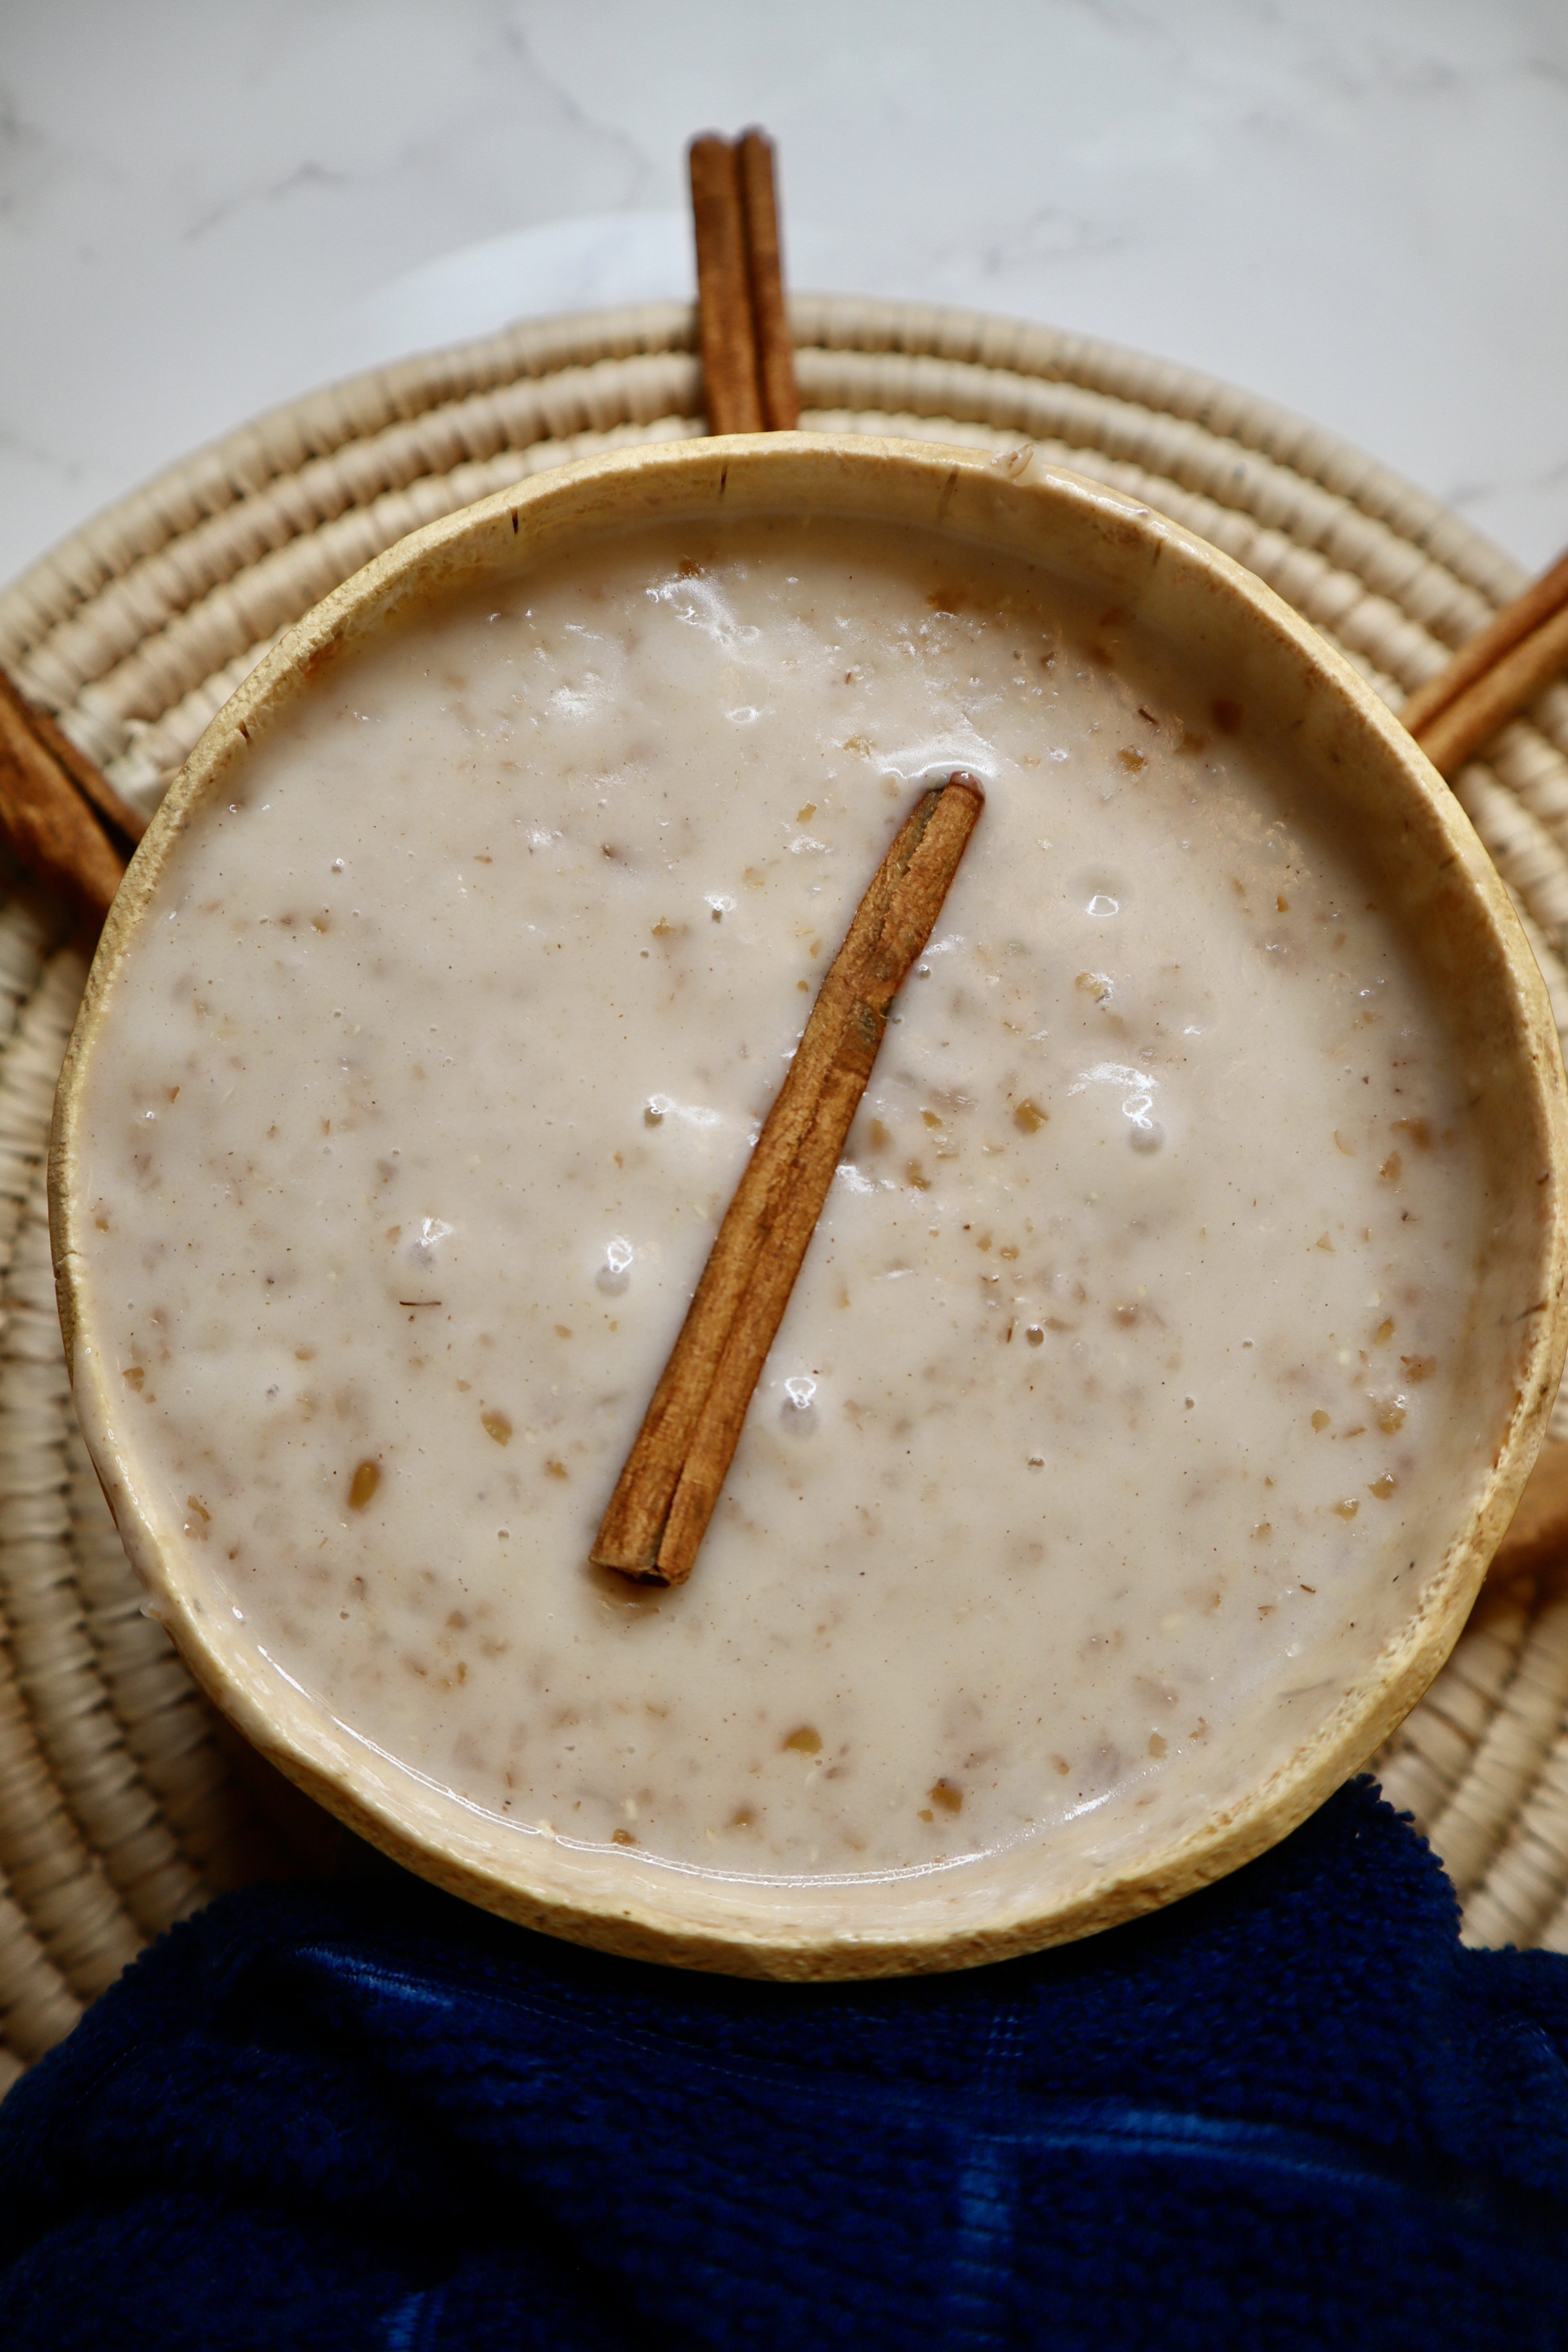 Jamaican bulgar wheat porridge with cinnamon stick decorated on top